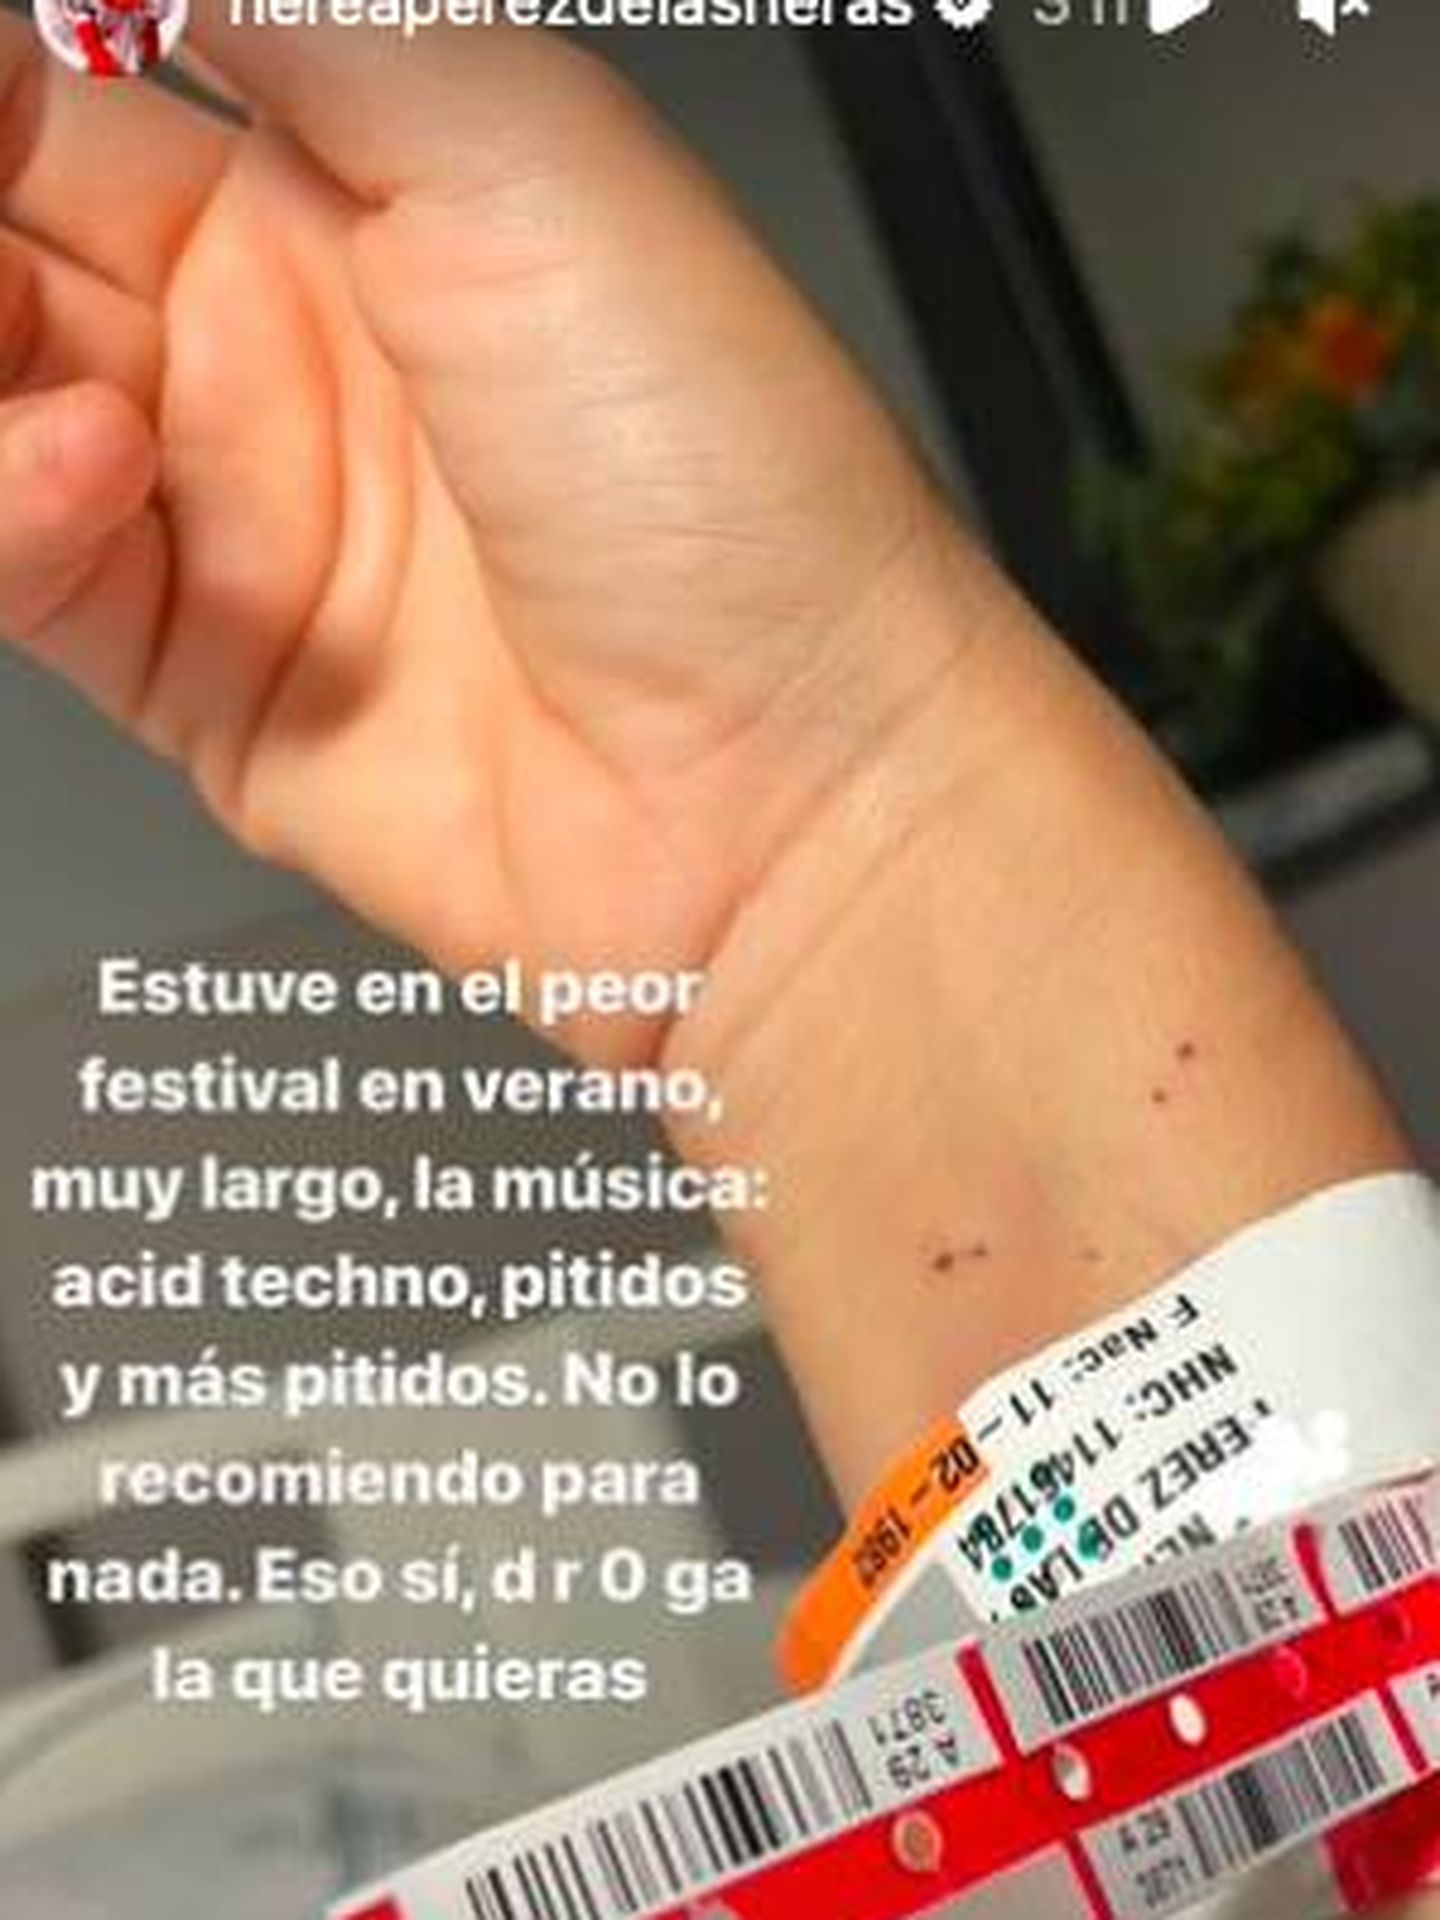  Nerea Pérez de las Heras, en el hospital. (Instagram/@nereaperezdelasheras)